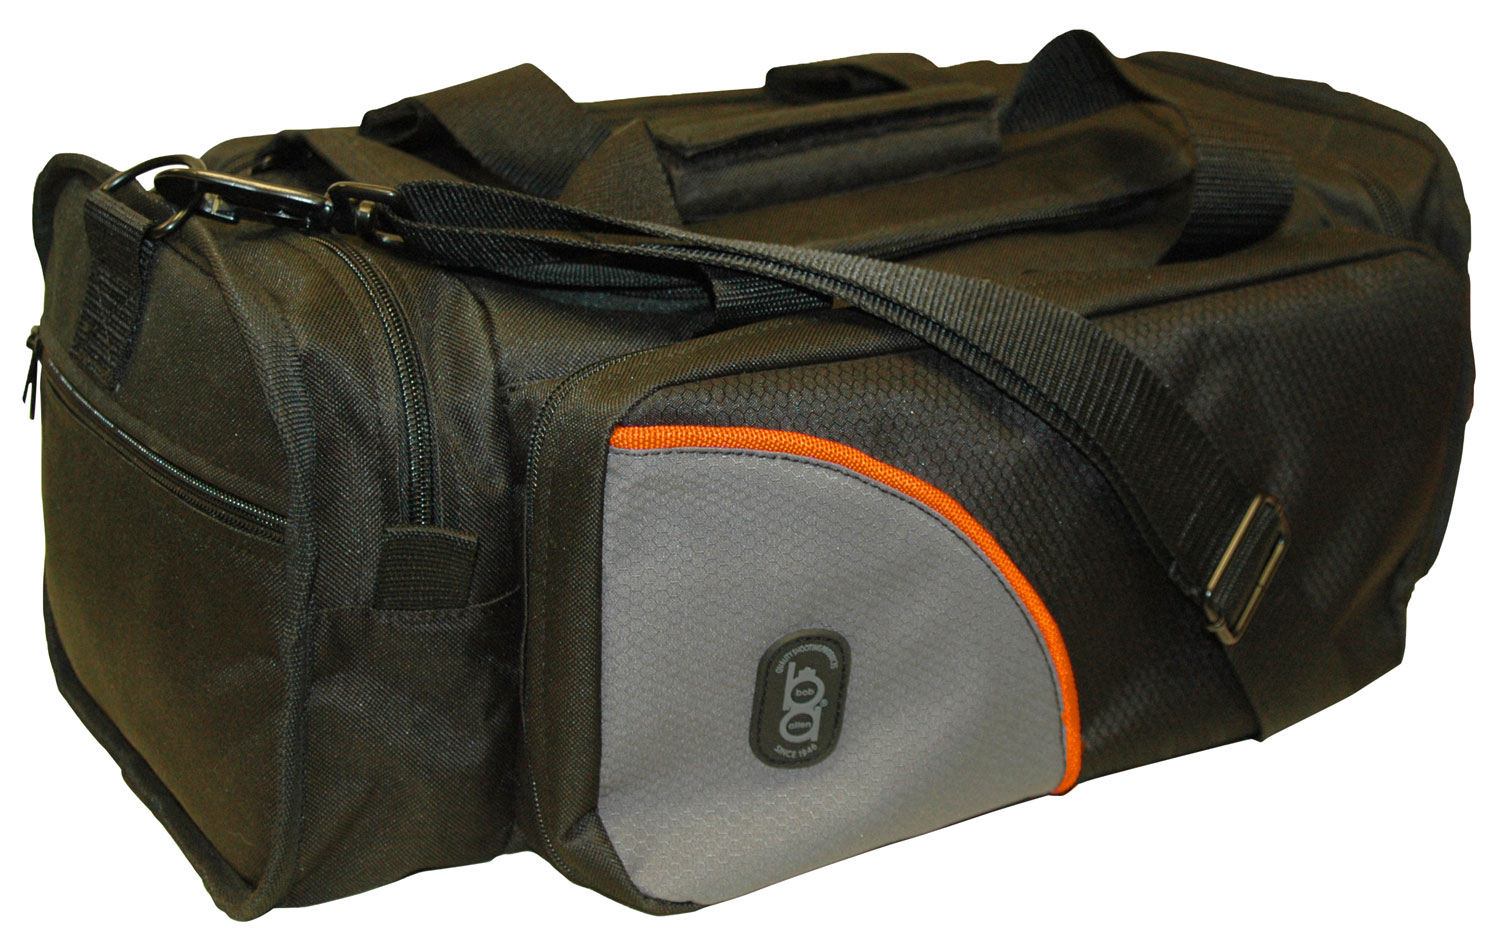 Bob Allen BA450 Club Range Bag Black with Gray Panel Ripstop Nylon with Padded Interior, Protection Pockets, Mag Loops & Wraparound Handles 18